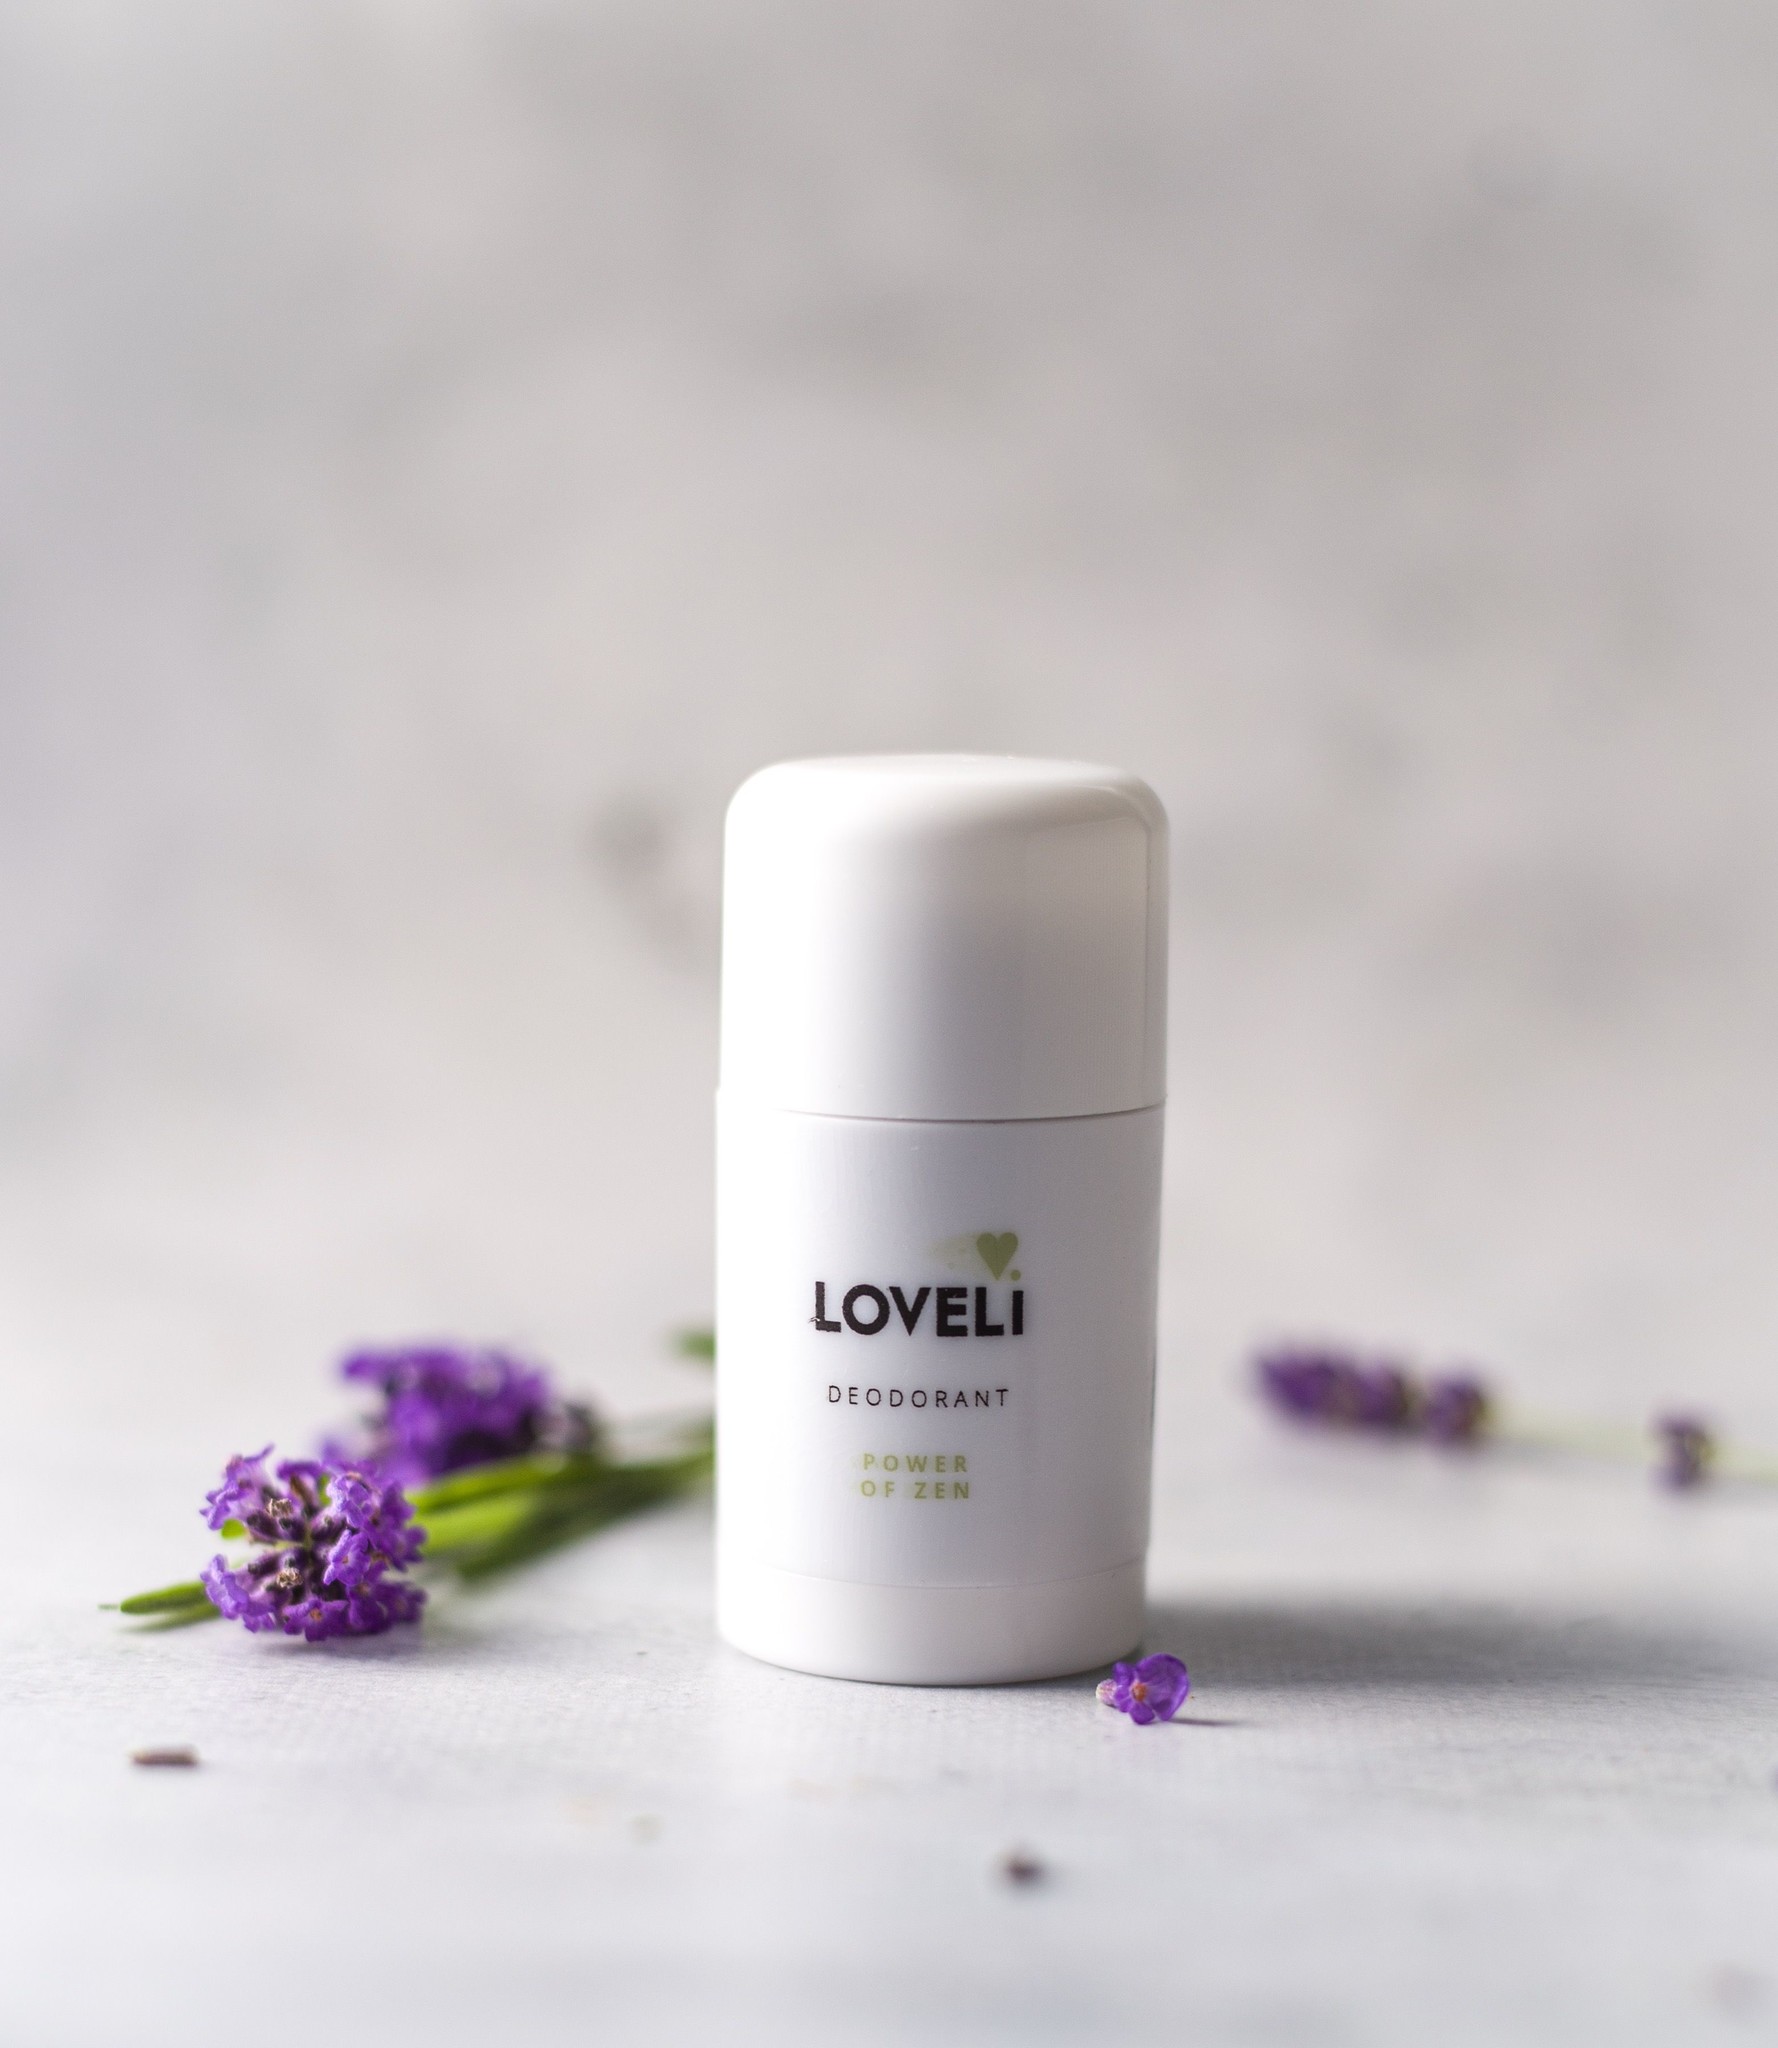 Famke test: De Loveli Power of Zen Deodorant